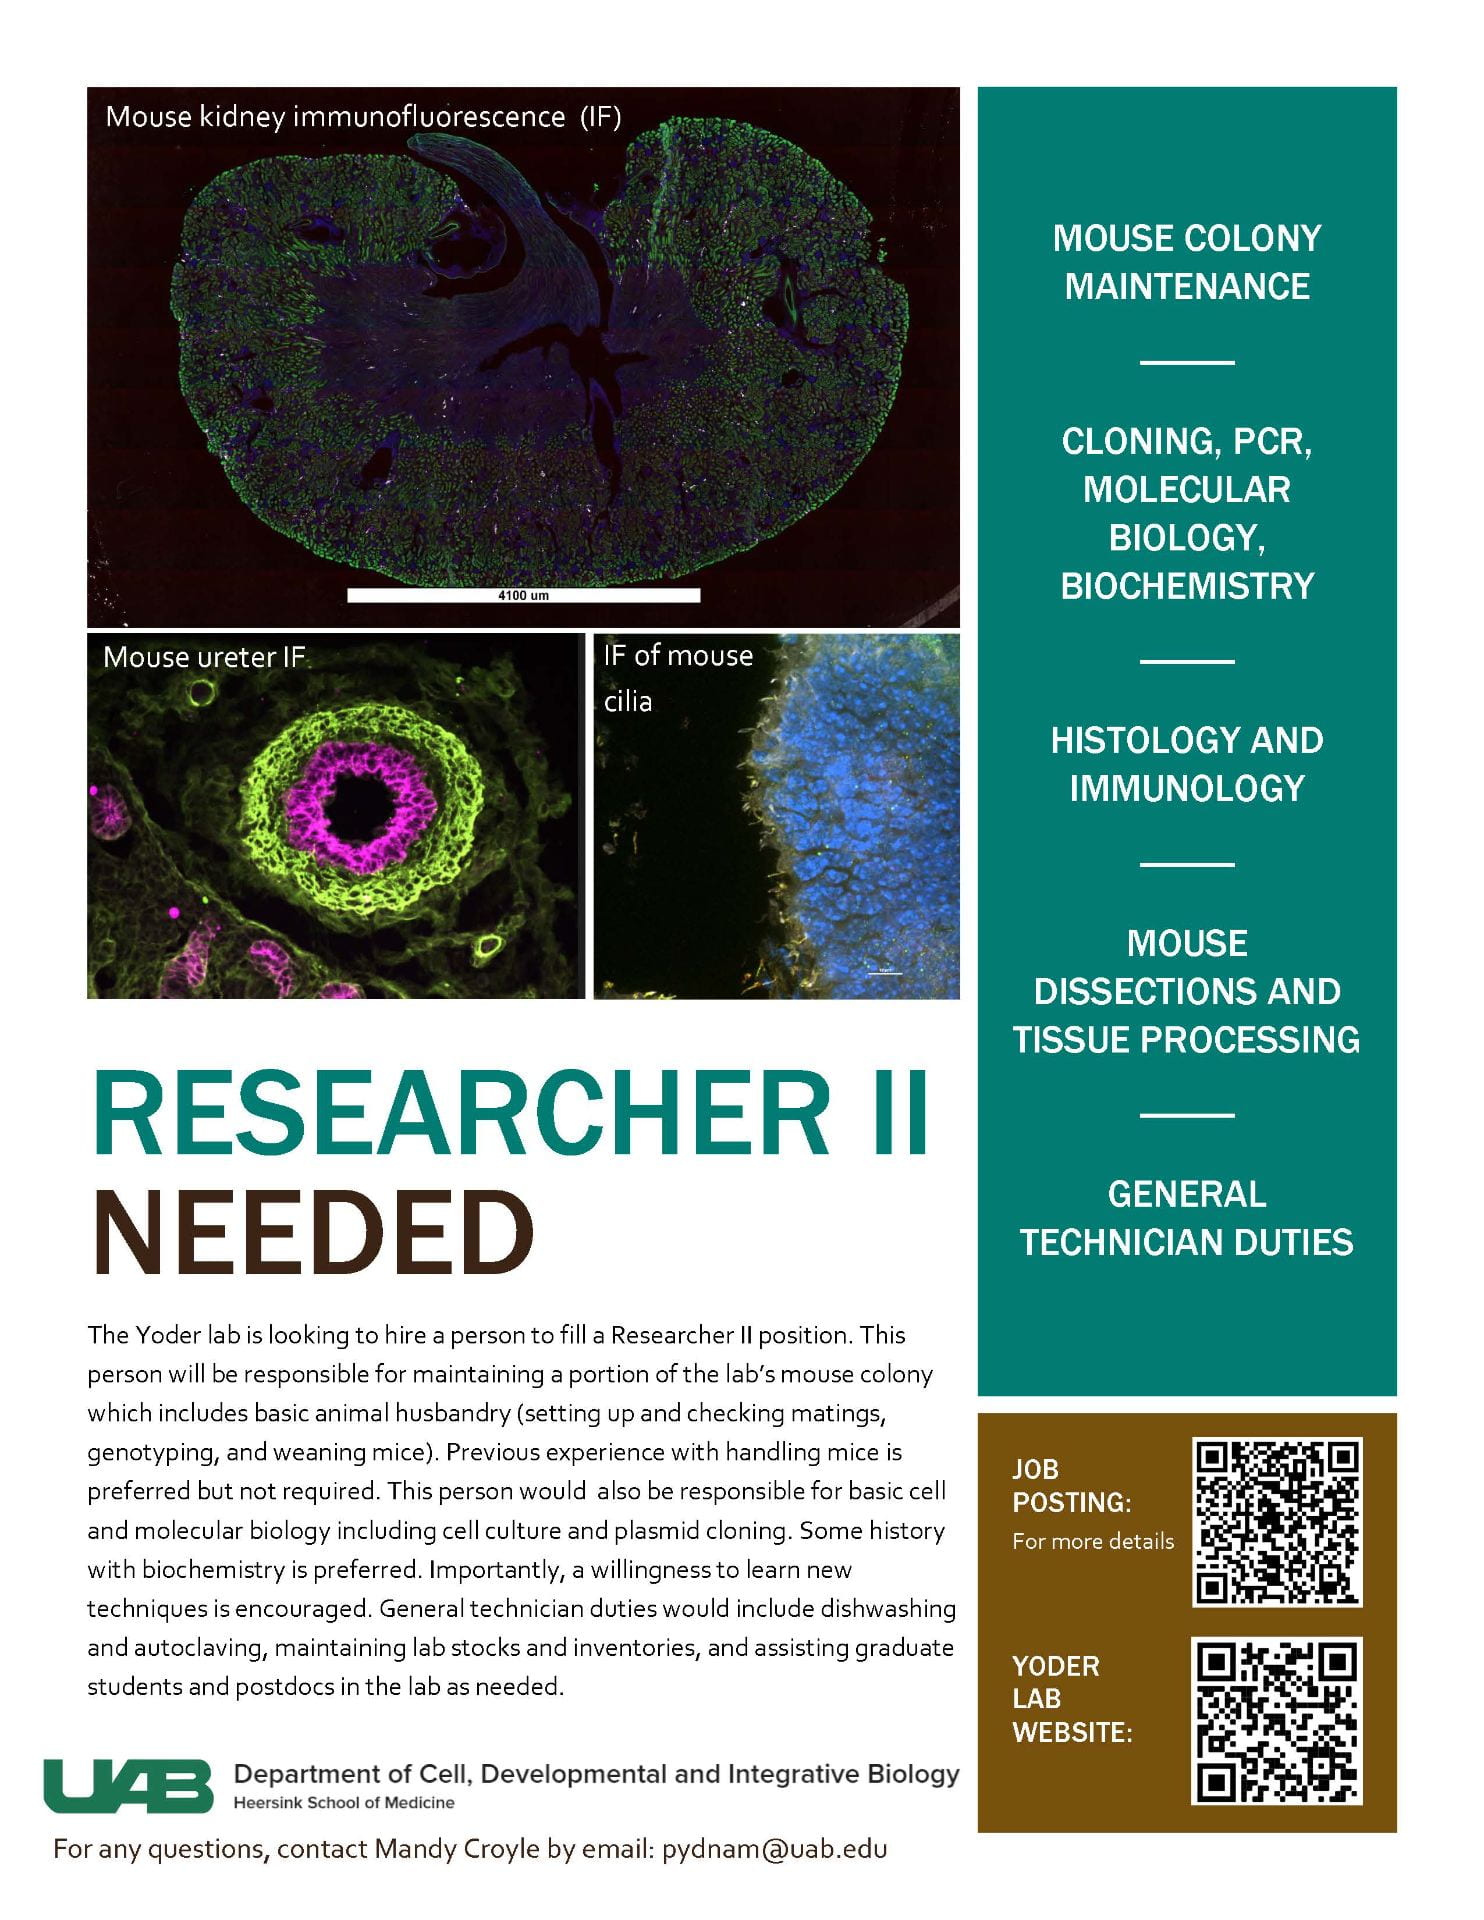 Researcher II / Lab Technician Needed